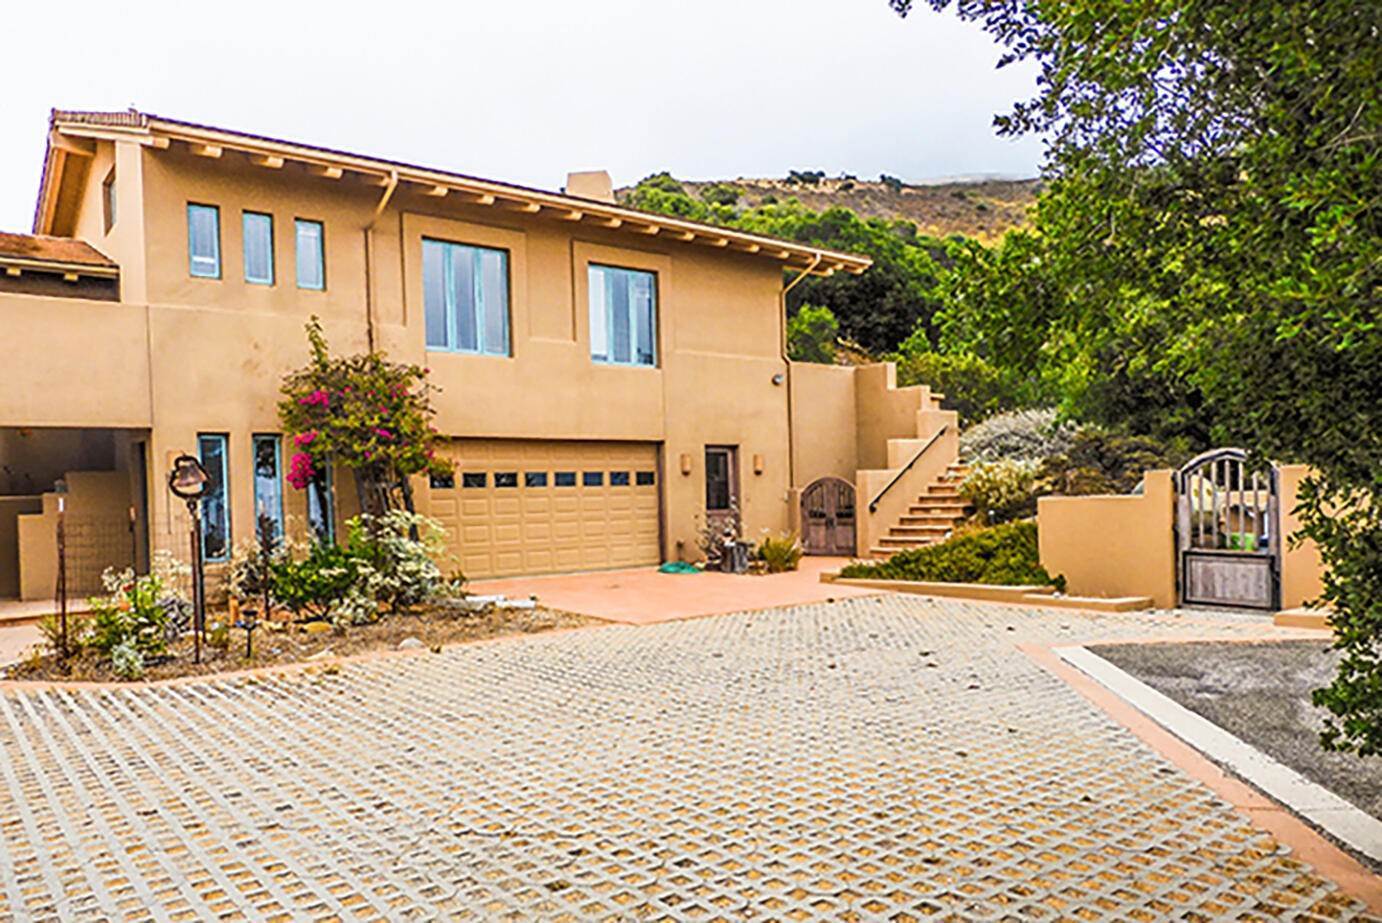 7. Estate for Sale at 105 Hollister Ranch Goleta, California 93117 United States